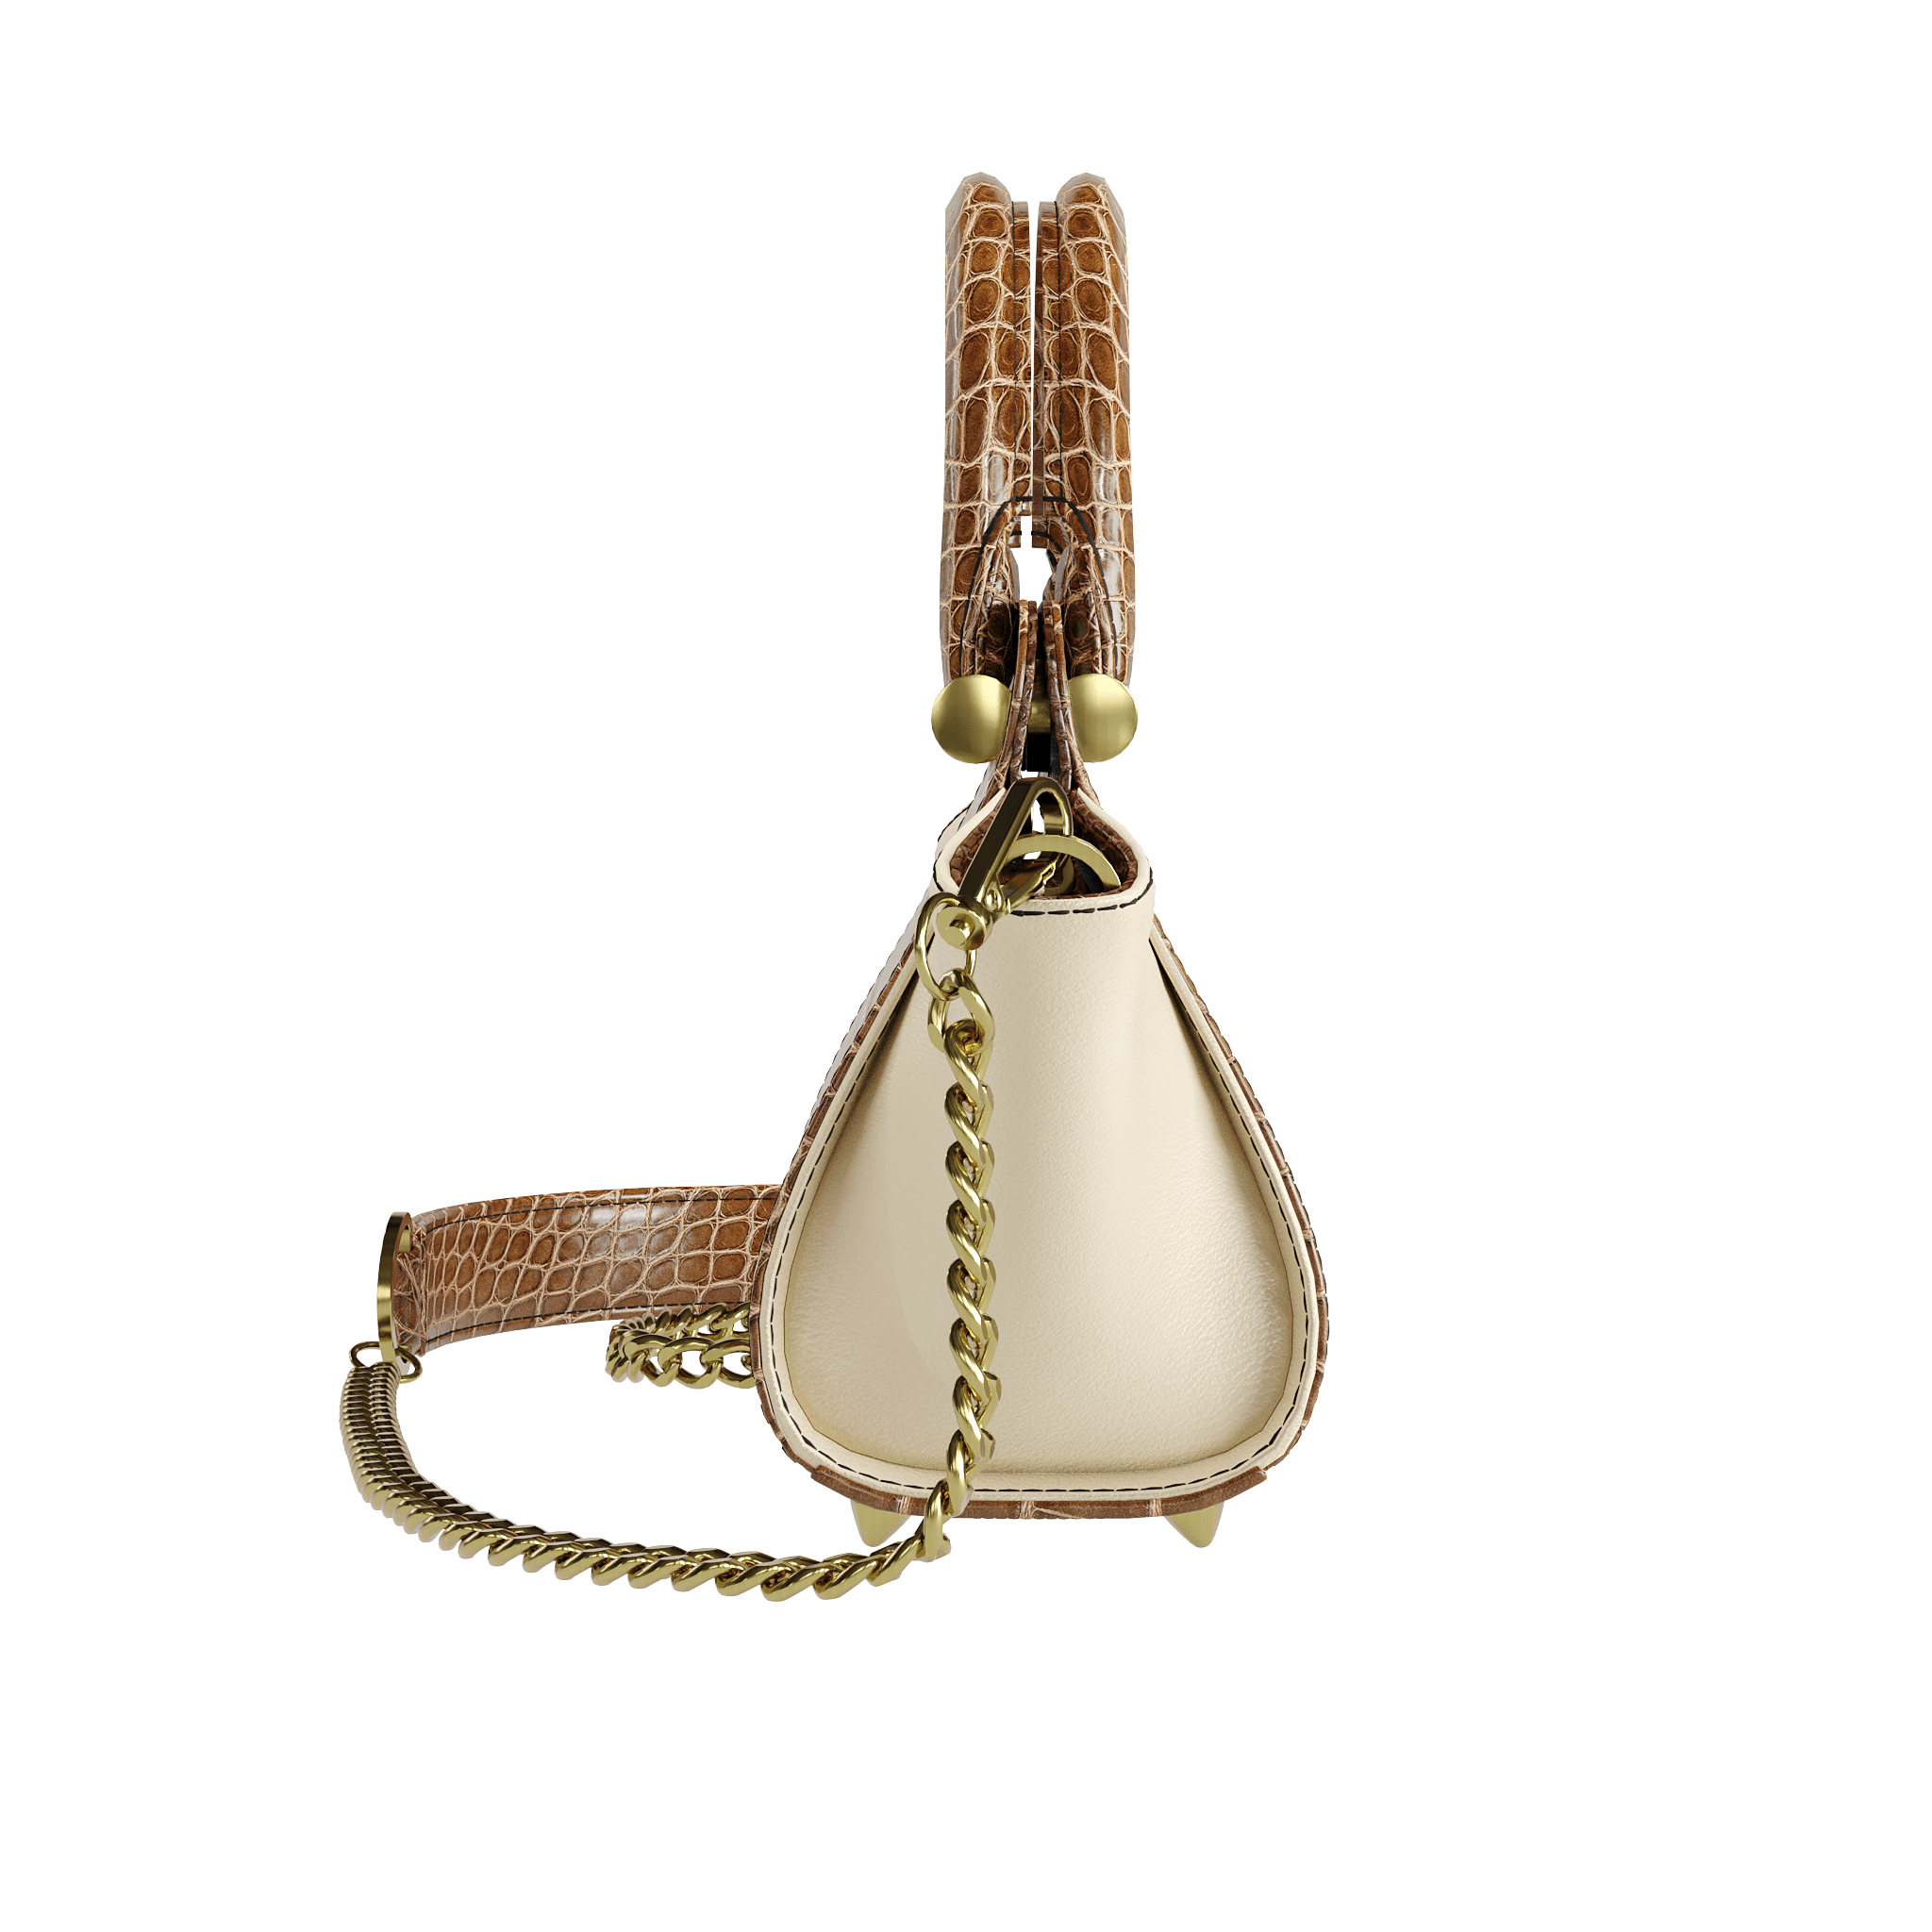 Authentic Brown Alligator Handbag With Cream Accents